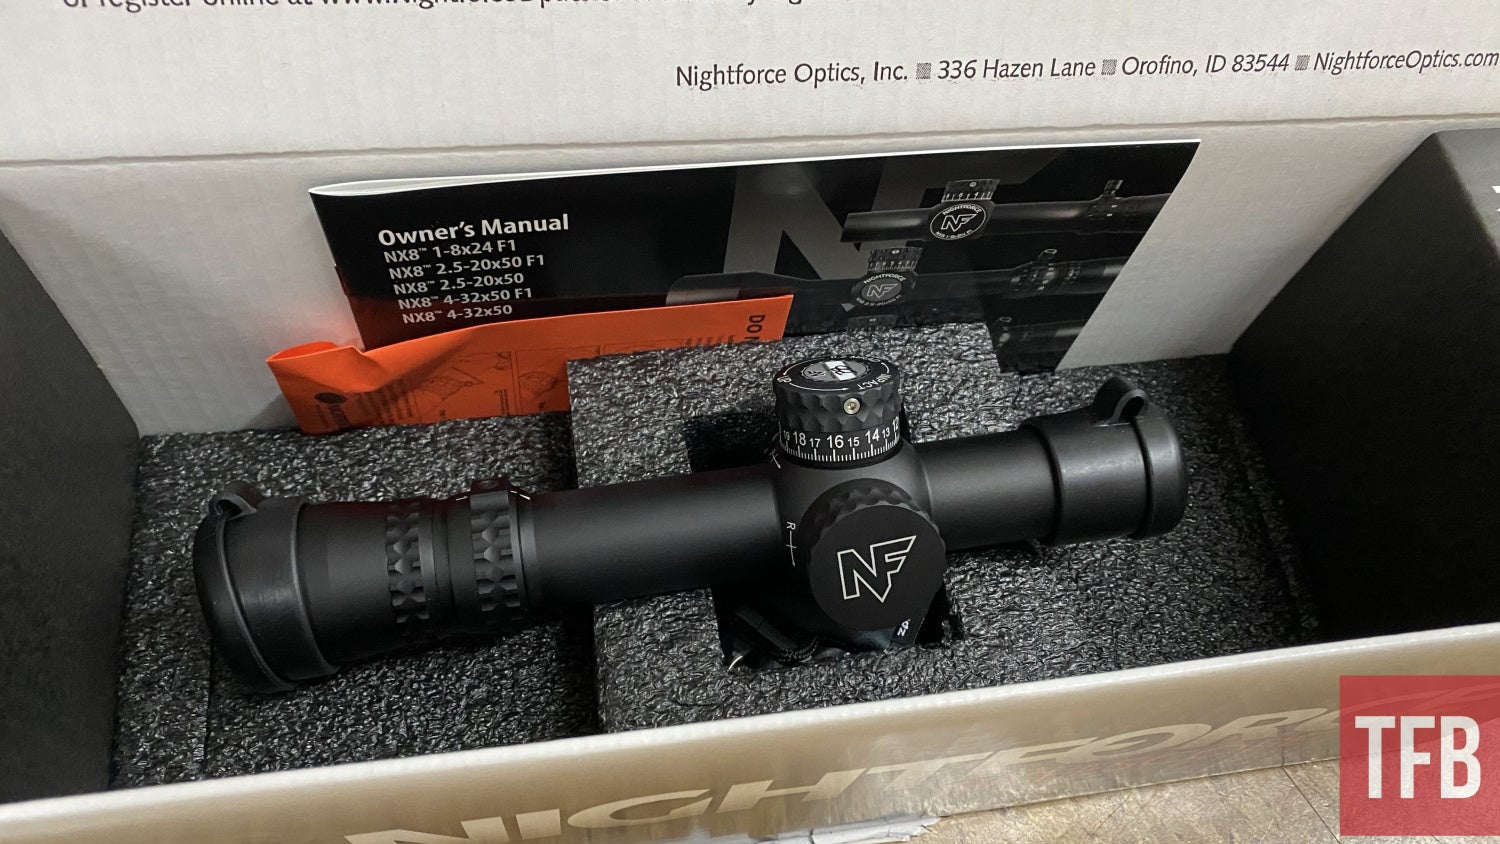 TFB Review: Nightforce Optics NX8 1-8x24 Scope